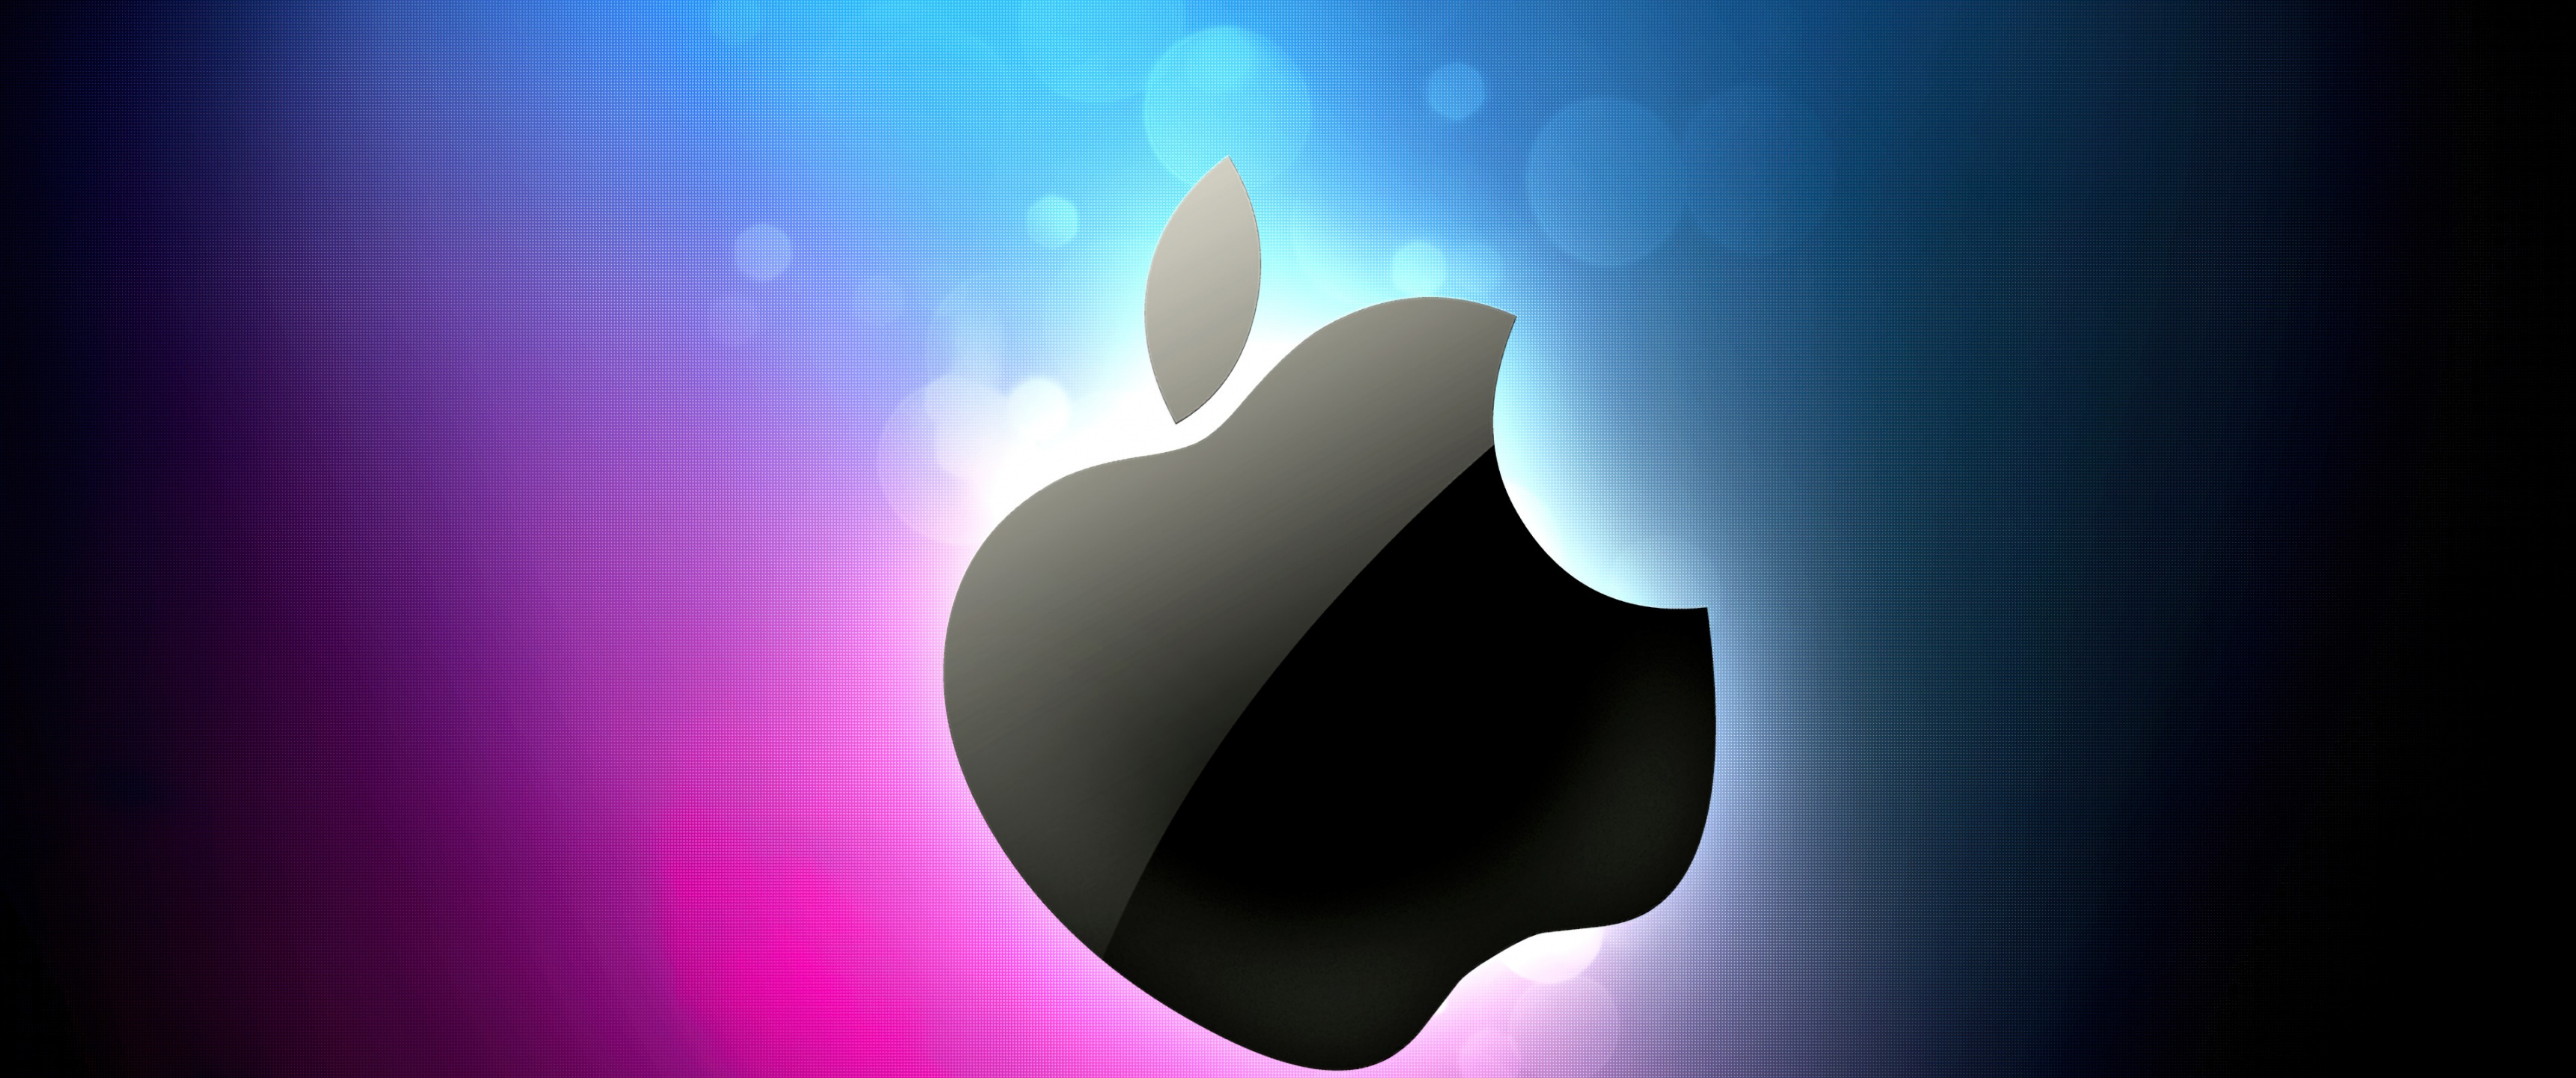 Apple logo Wallpaper 4K, Gradient background, Technology, #6032